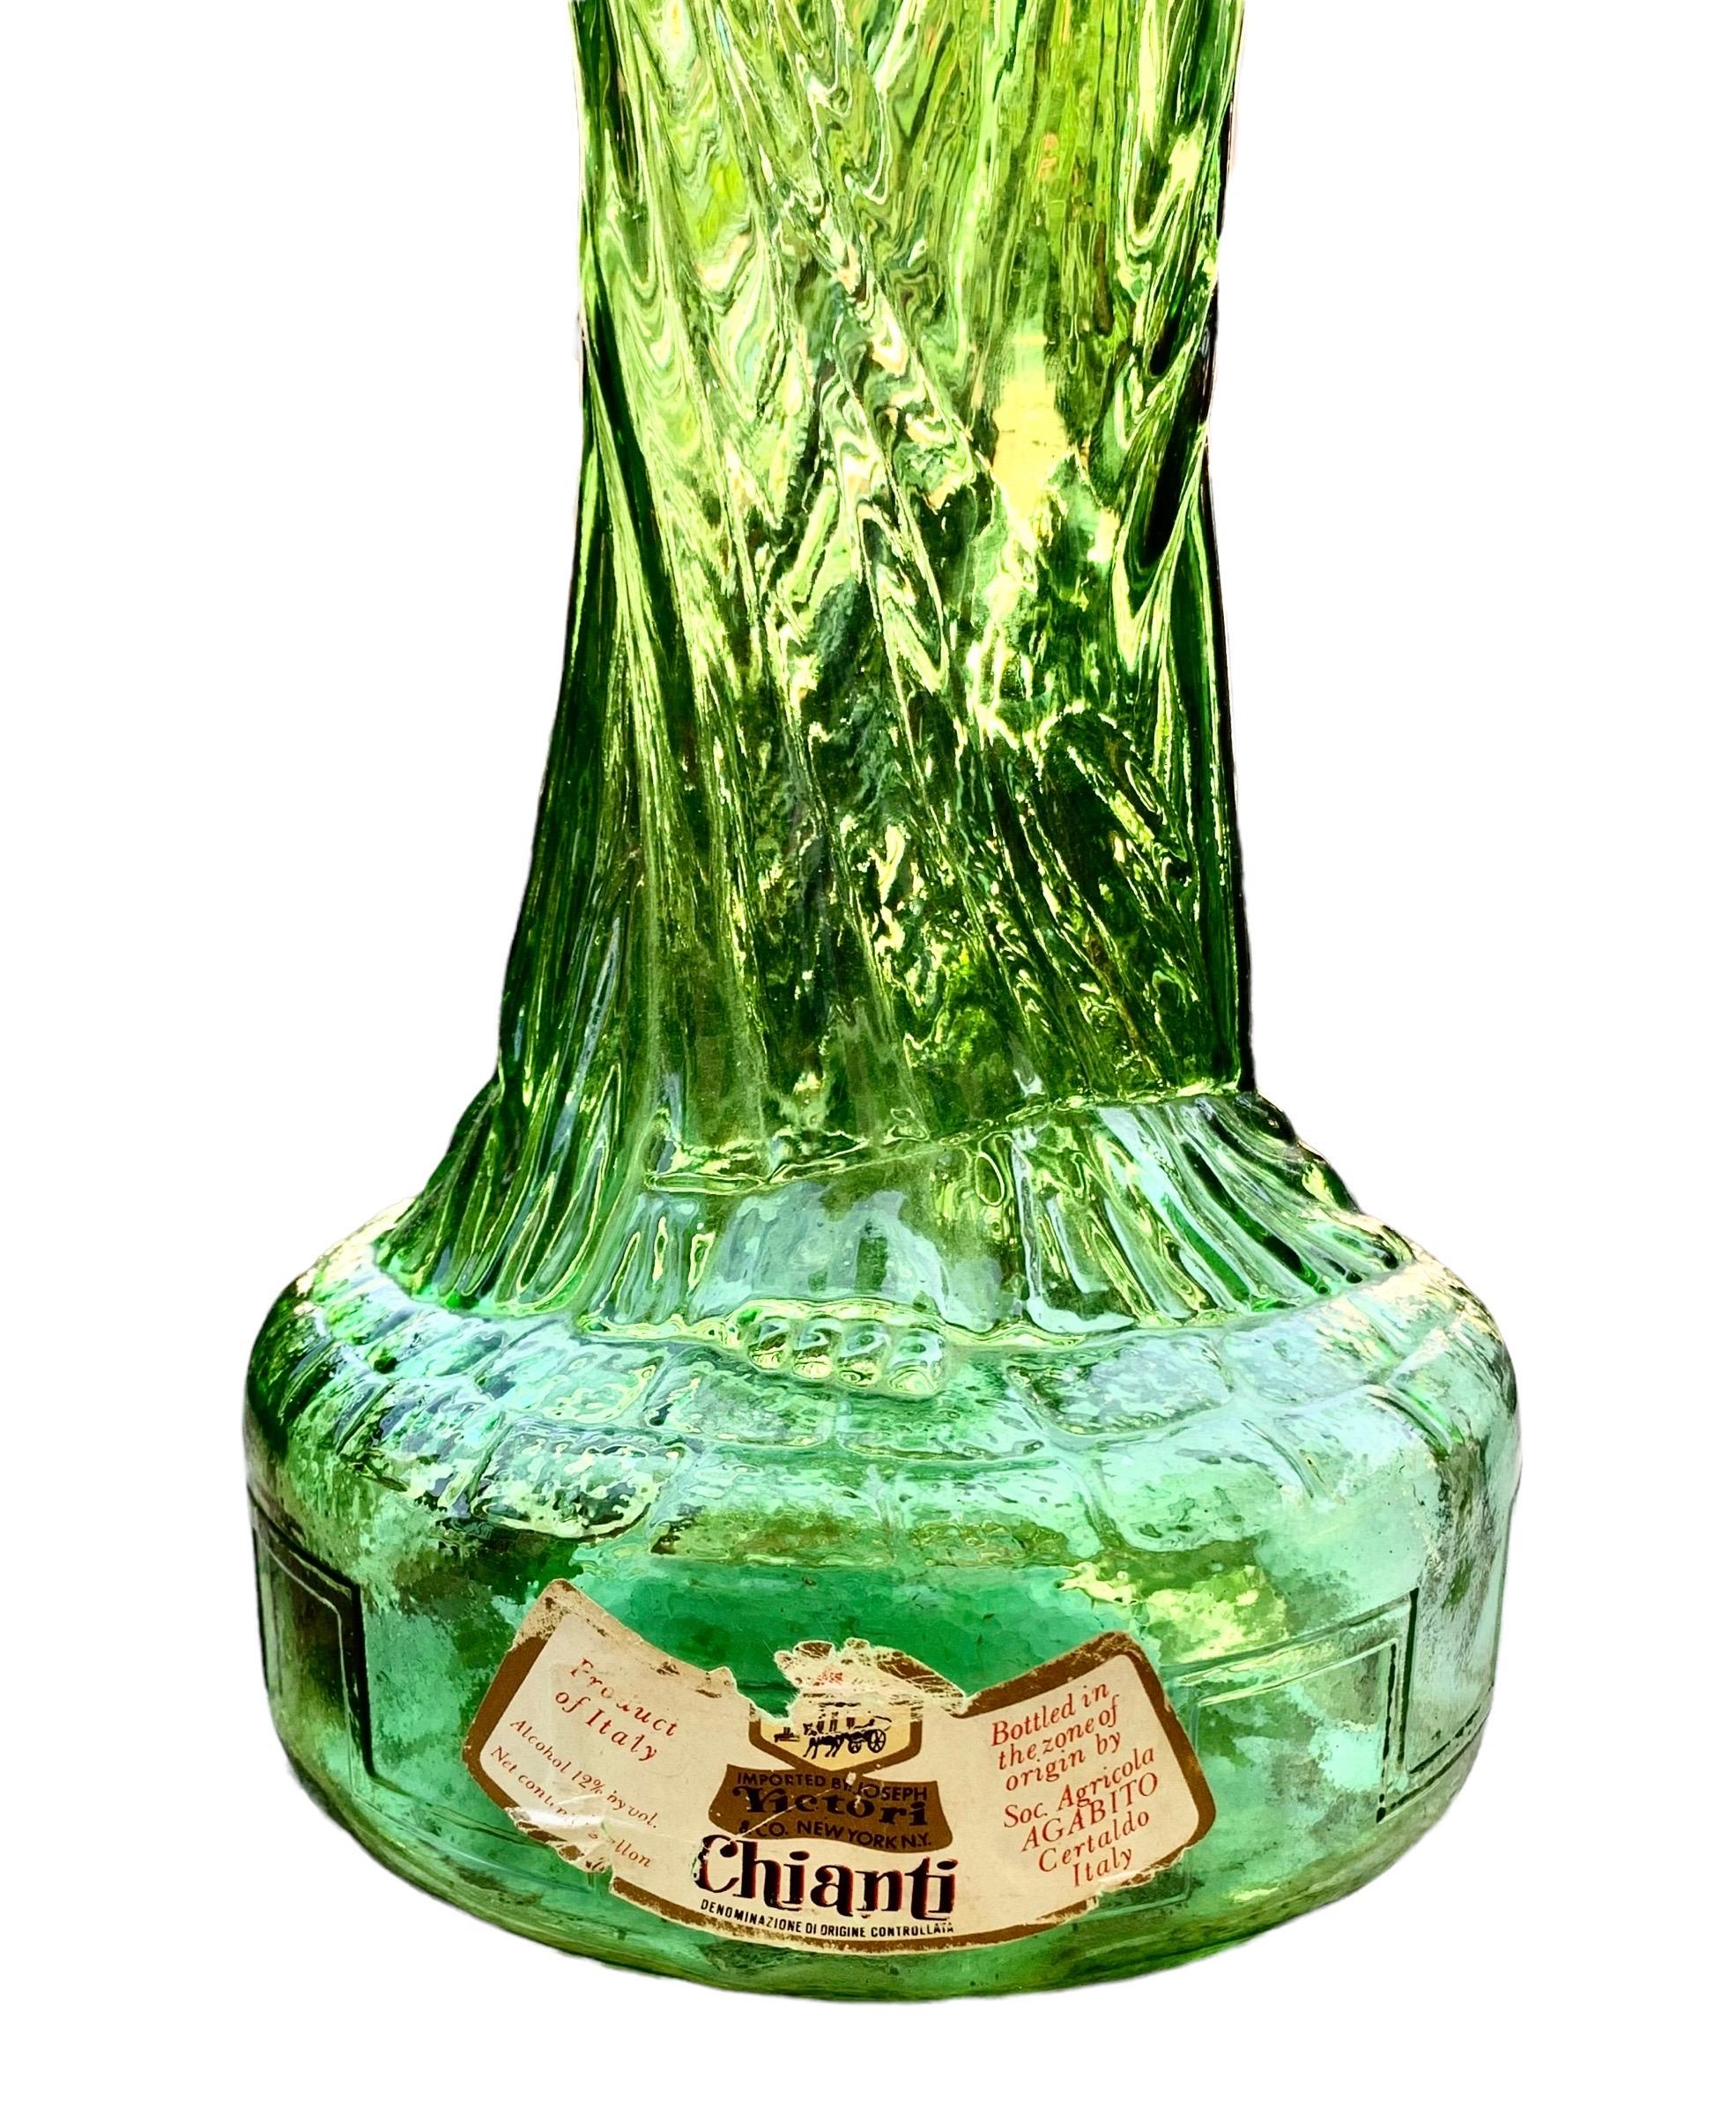 4 ft tall bottle of chianti